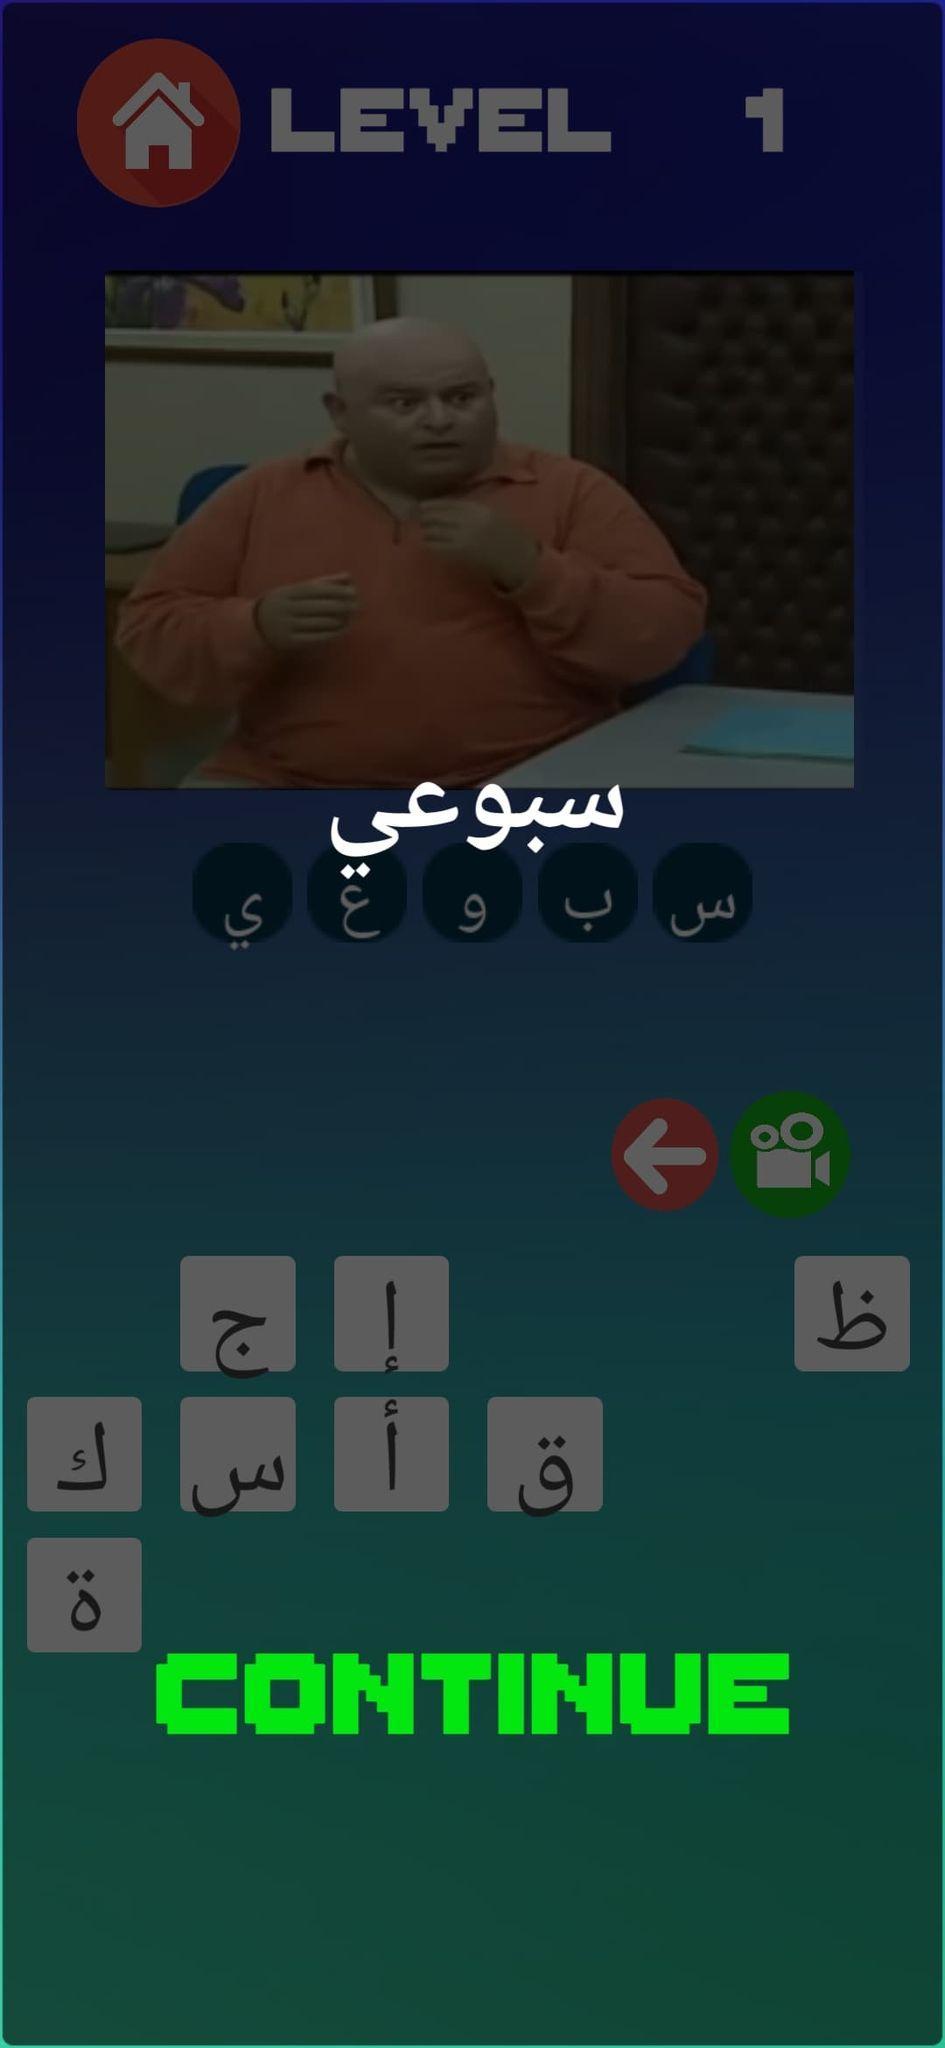 Choufli hal Quiz -  شوفلي حل 2.0 Screenshot 3